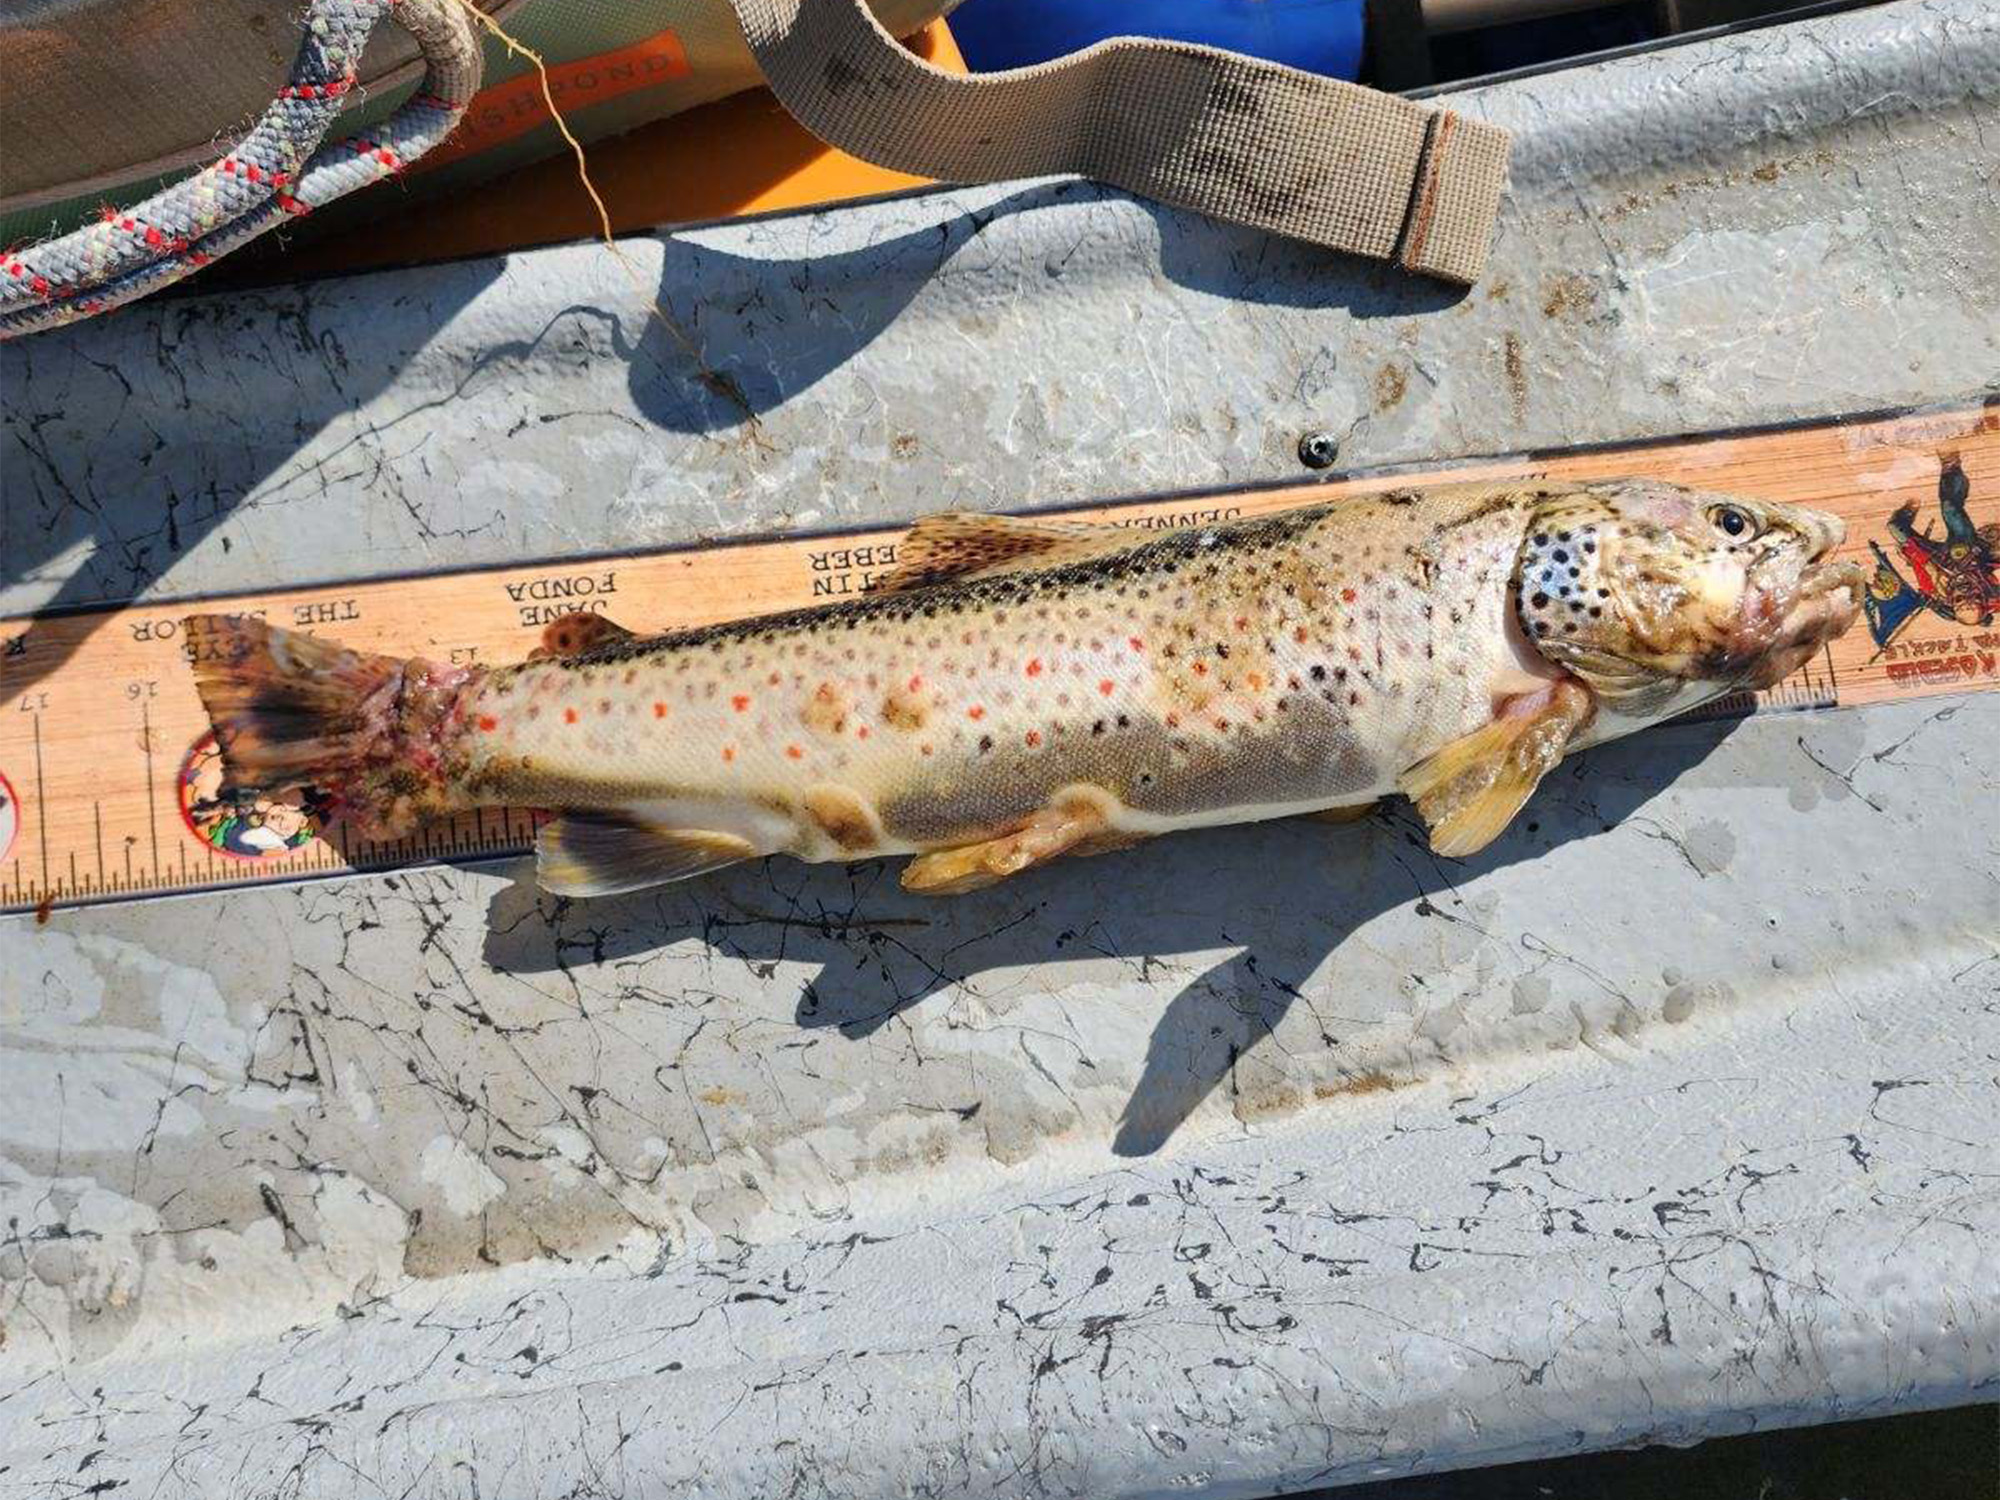 https://www.outdoorlife.com/wp-content/uploads/2023/08/04/mt_trout_declines_dead_brown_1.jpg